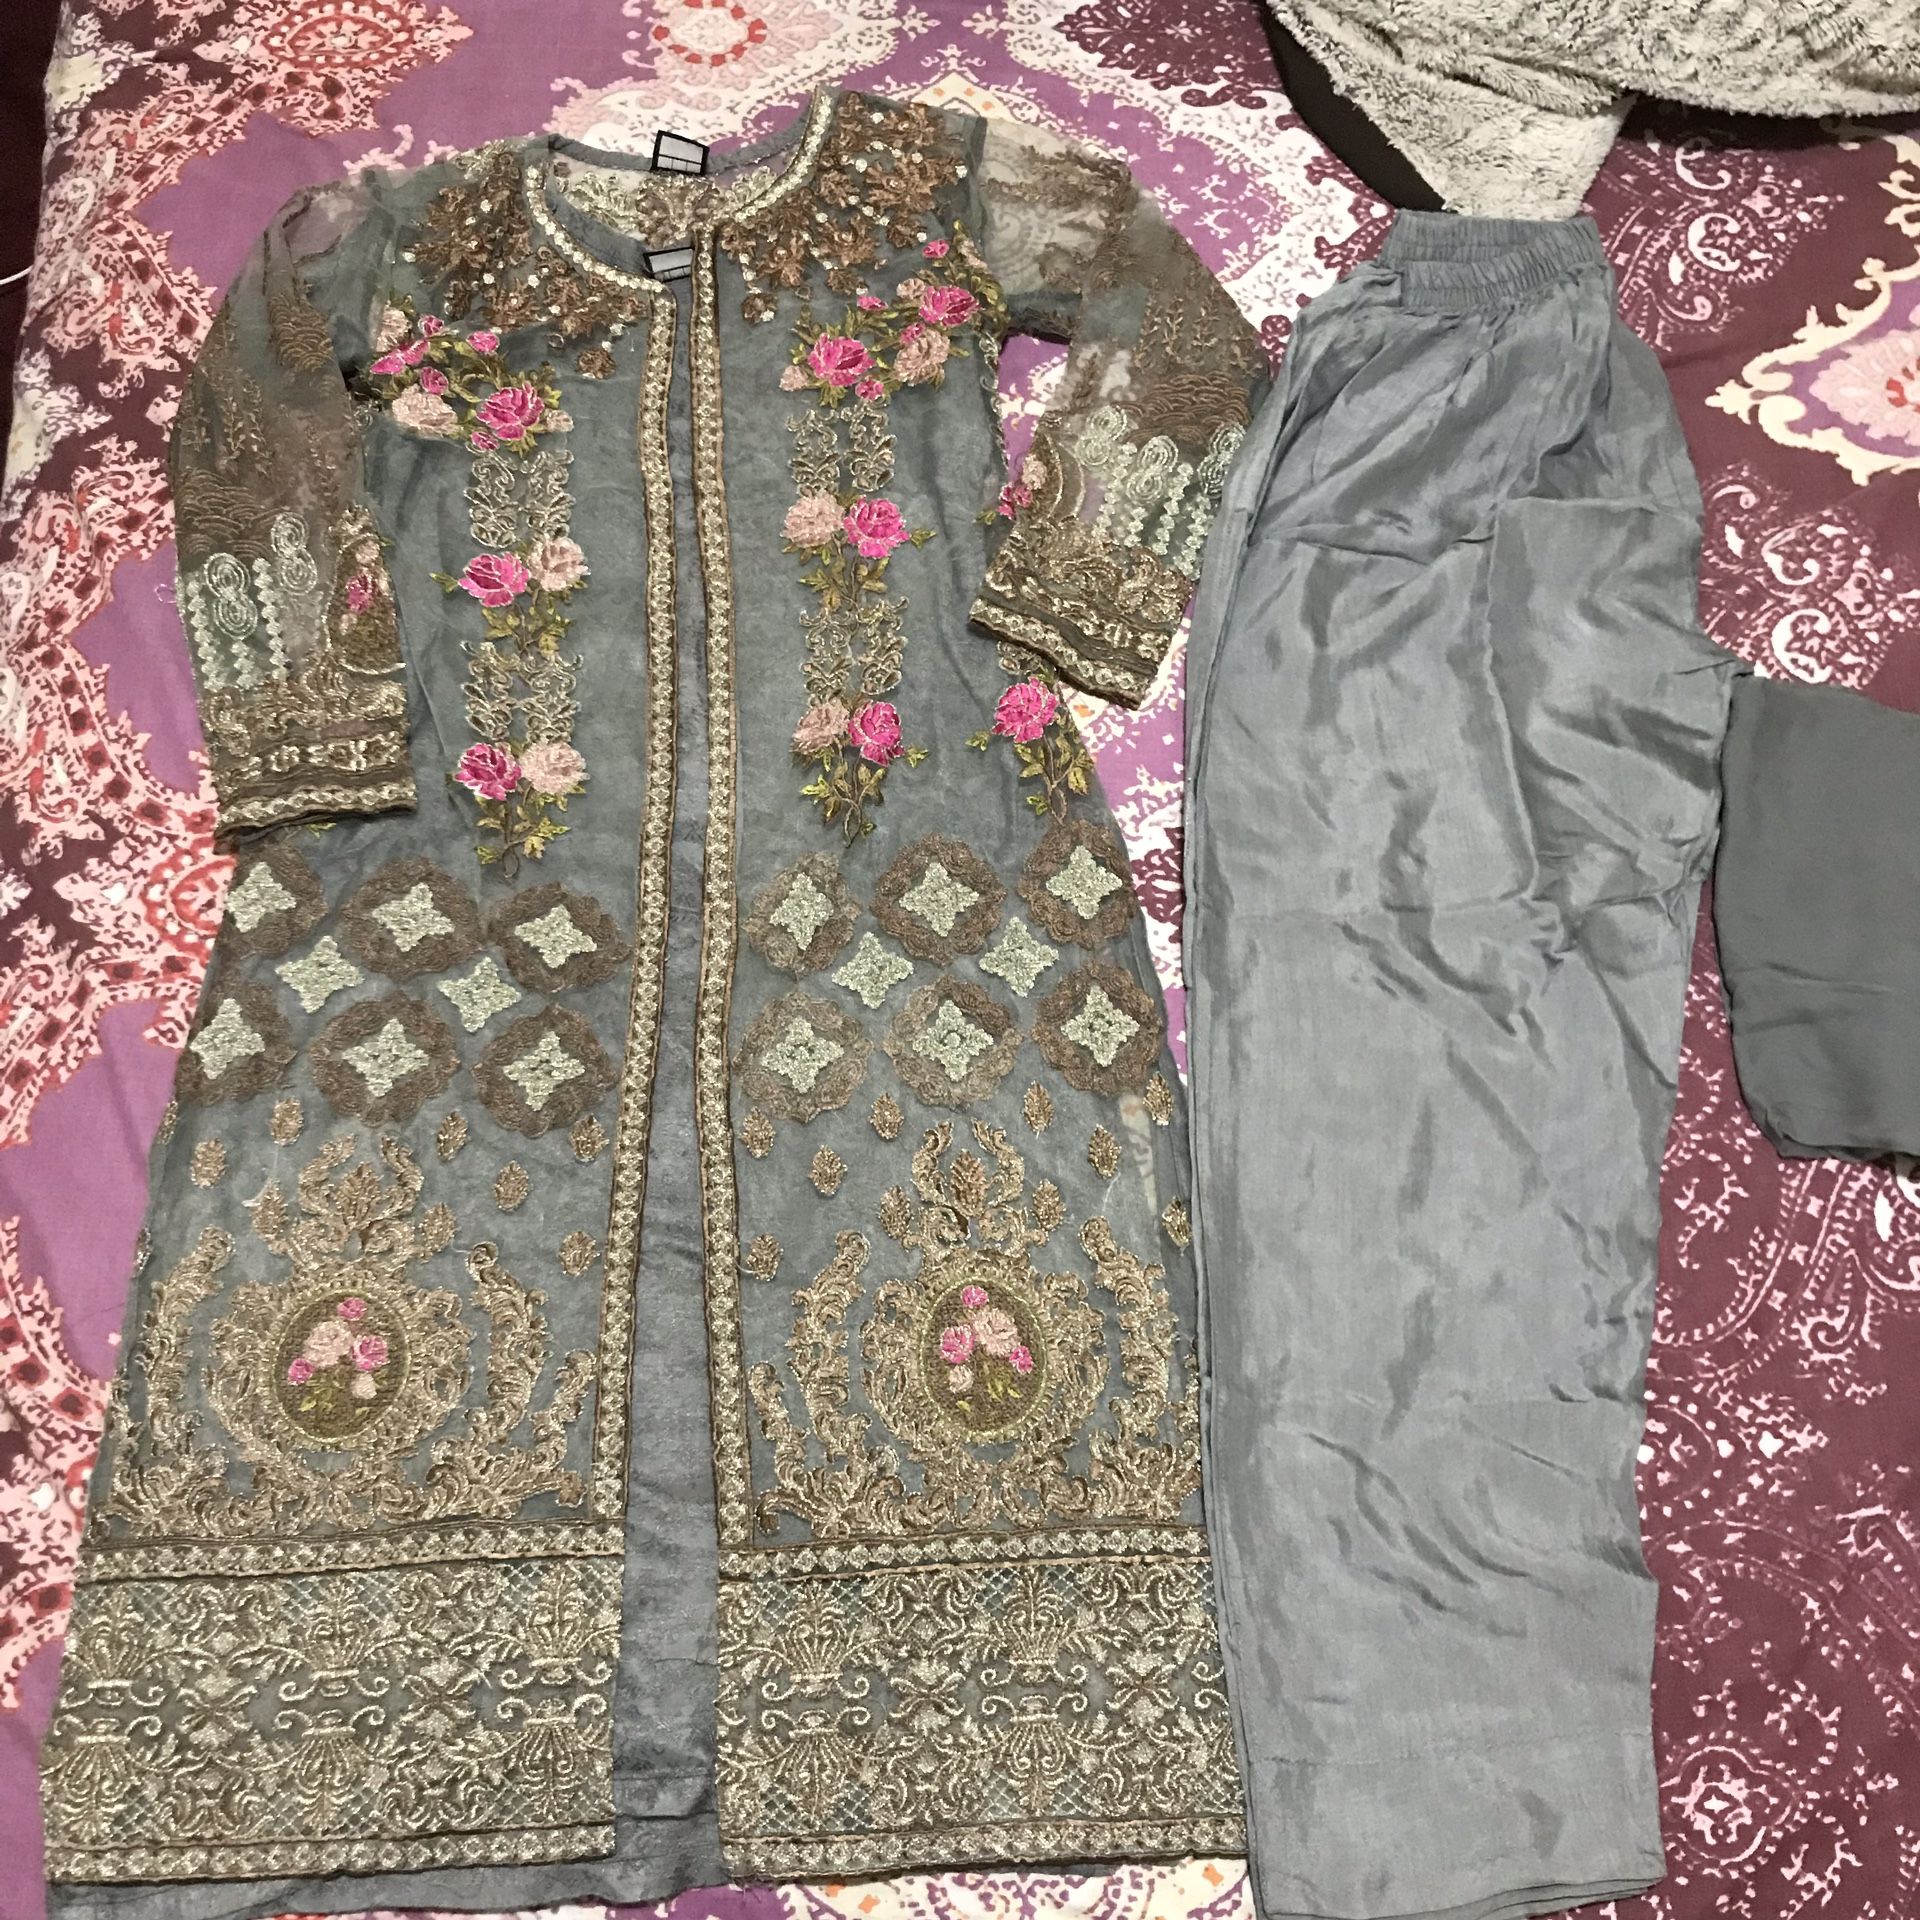 Pakistani Indian desi party wedding dress clothes outfit